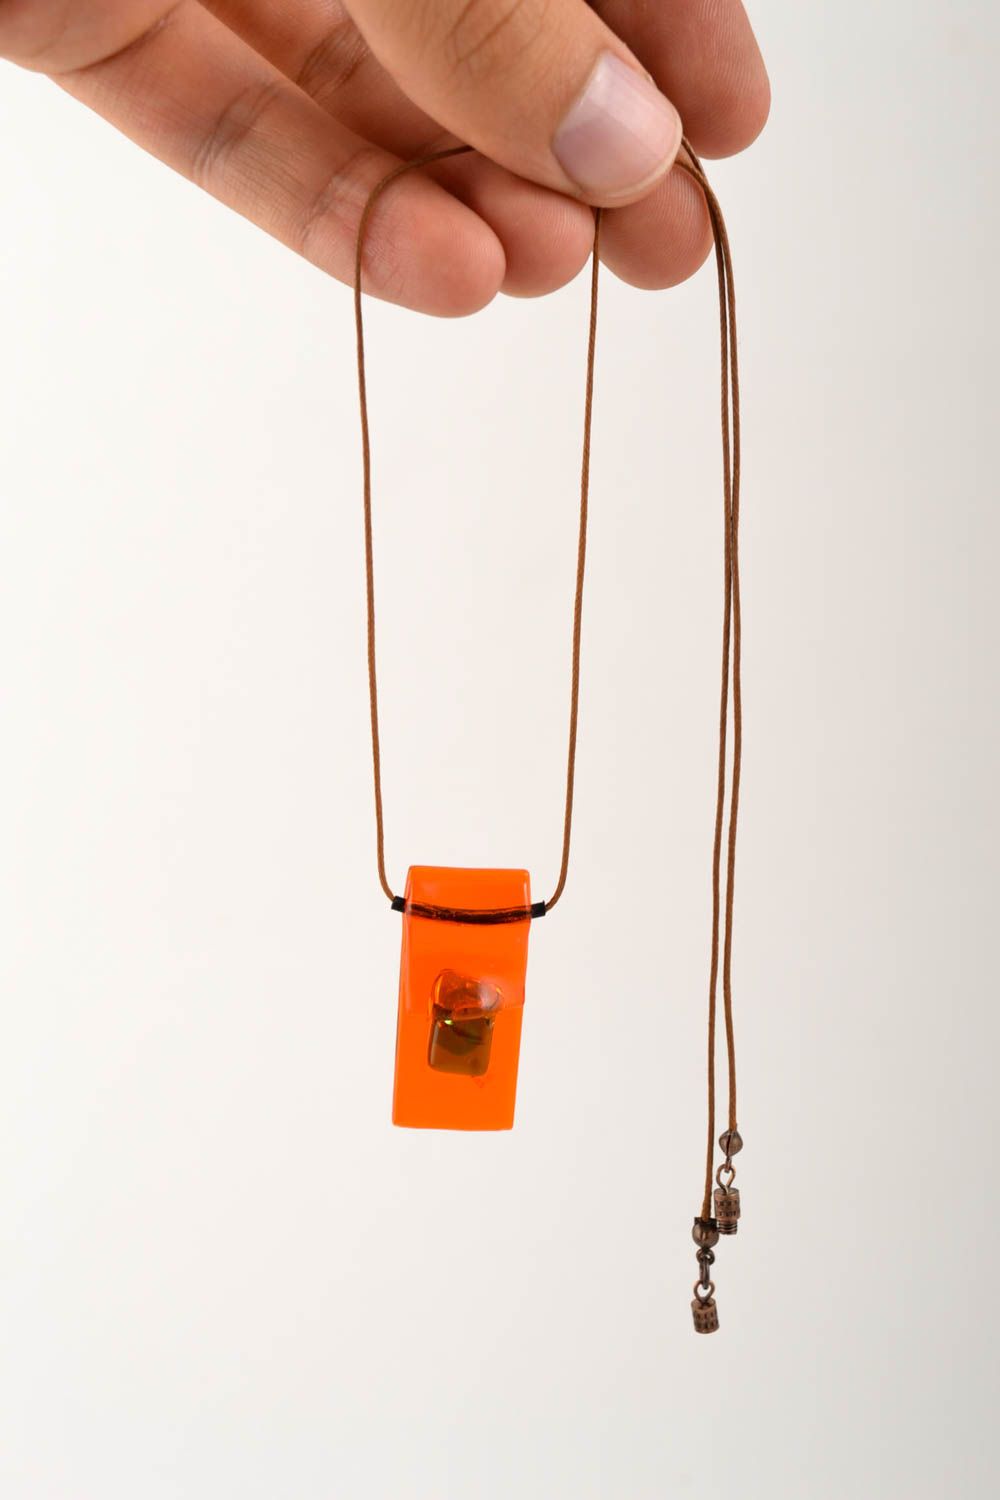 Handmade glass pendant glass bijouterie for women unusual accessory perfect gift photo 5